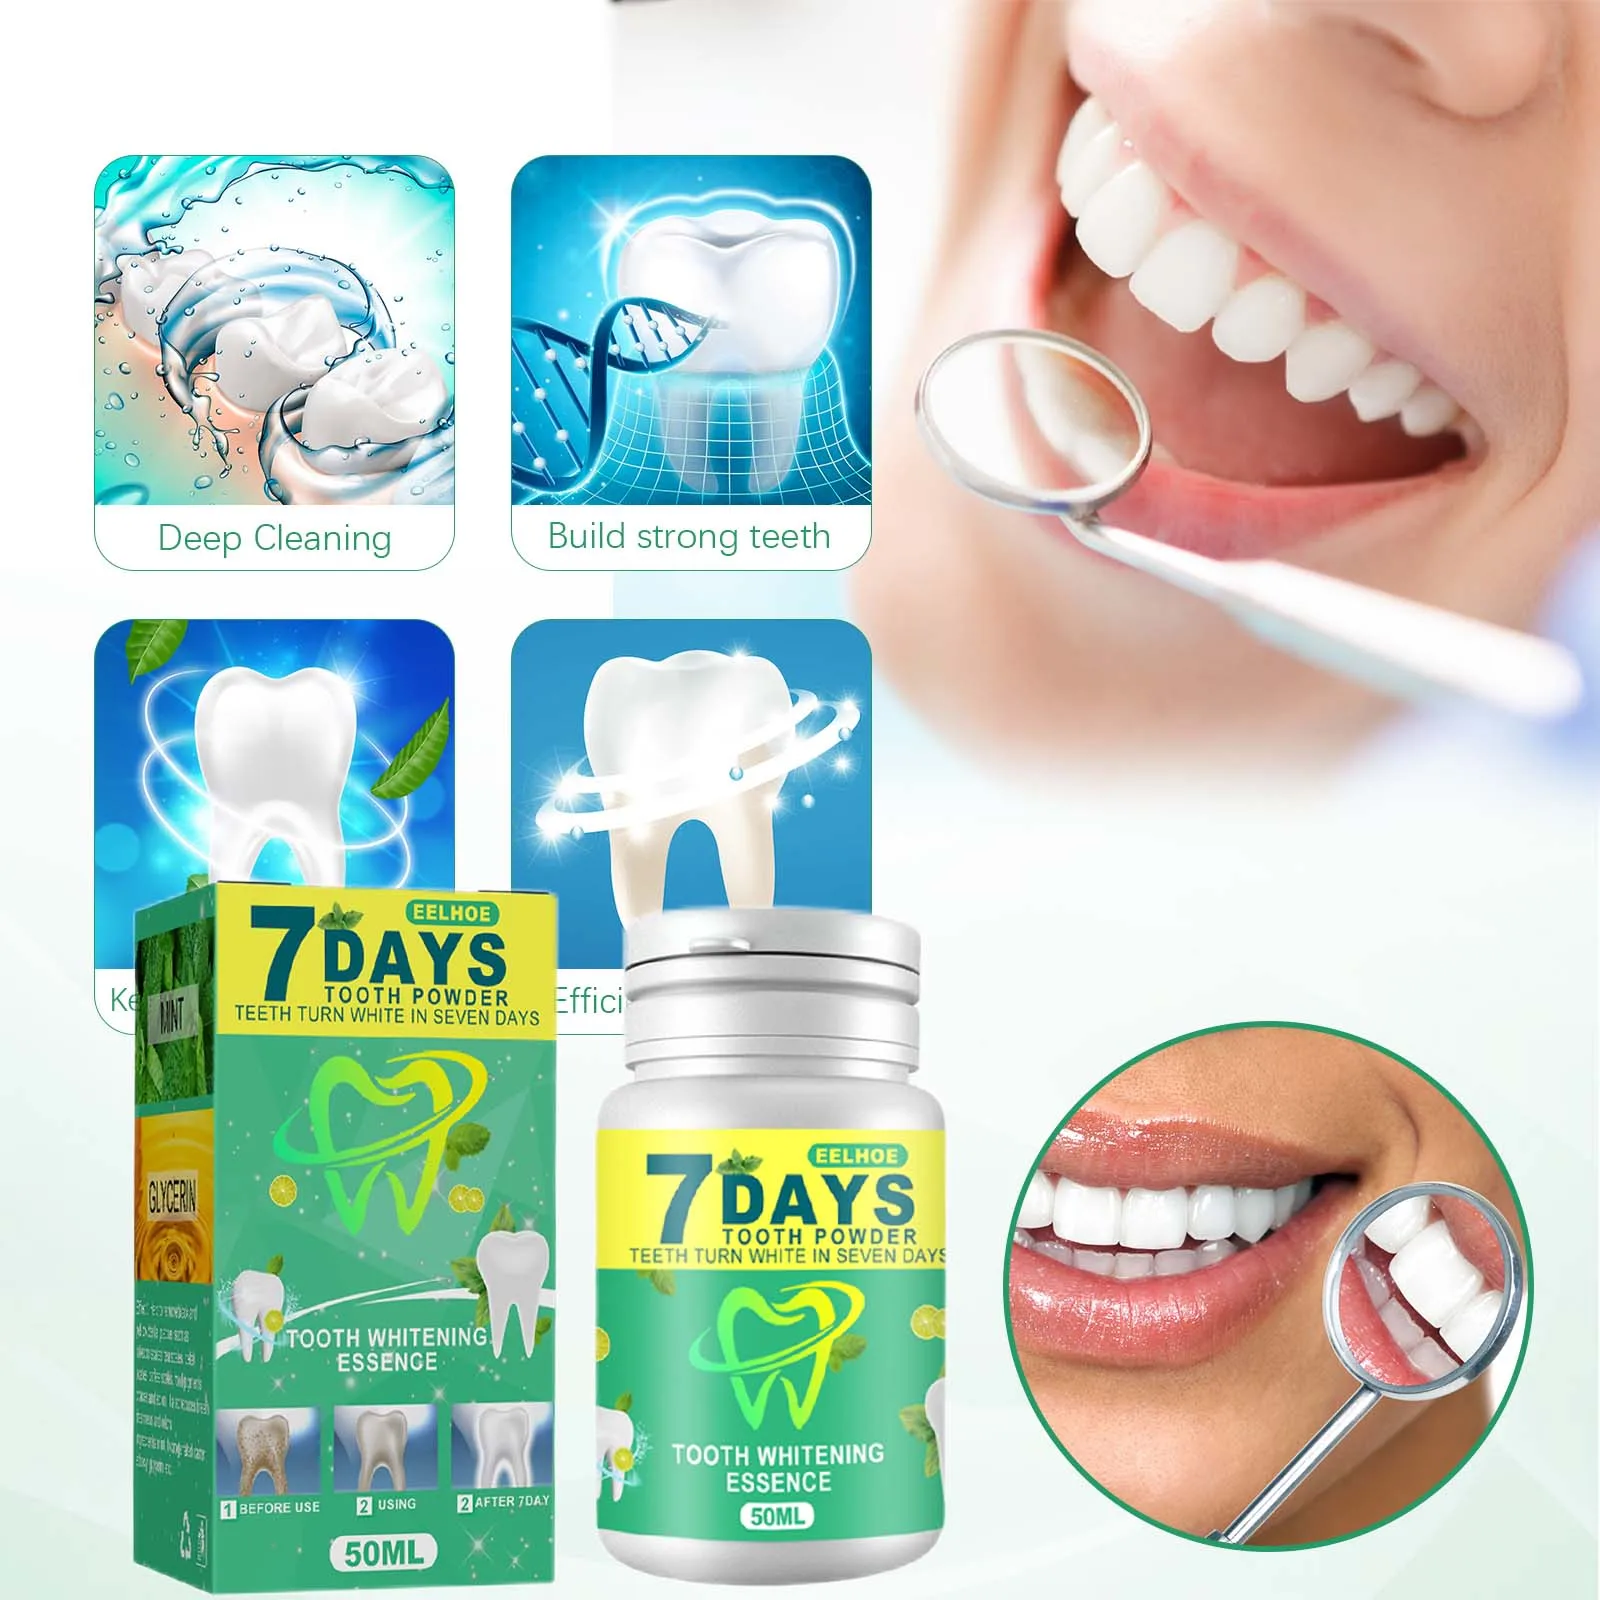 50g Teeth Whitening Powder Remove Smoke Coffee Tea Stains Teeth Cleaning Powder Tooth Brightening Powder Freshen Bad Breath